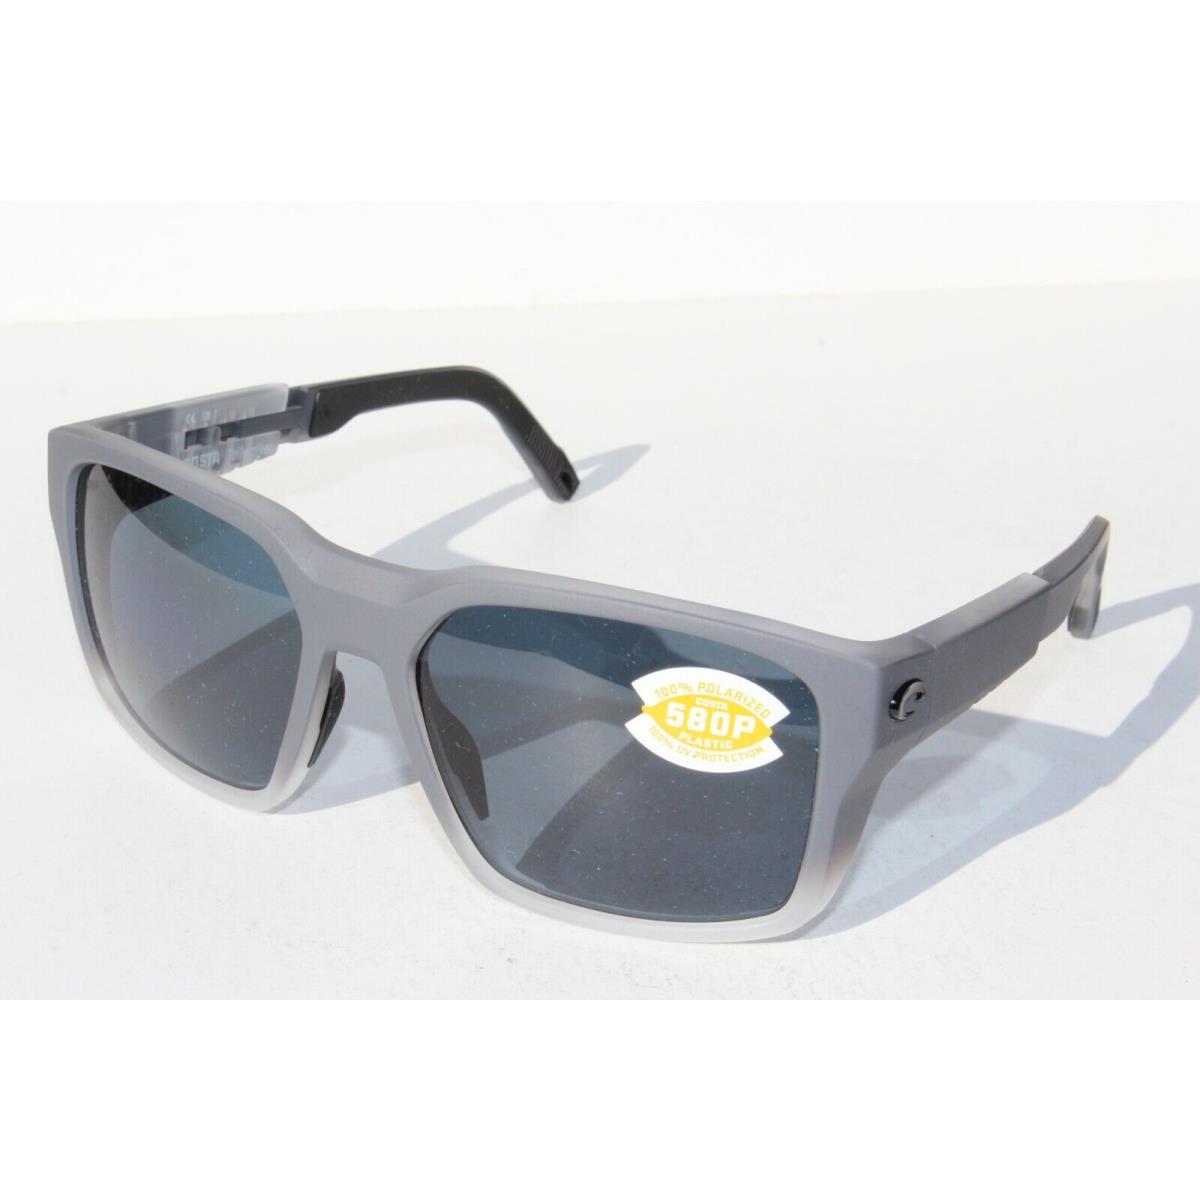 Costa Del Mar sunglasses Tailwalker - Frame: Gray, Lens: Gray 1